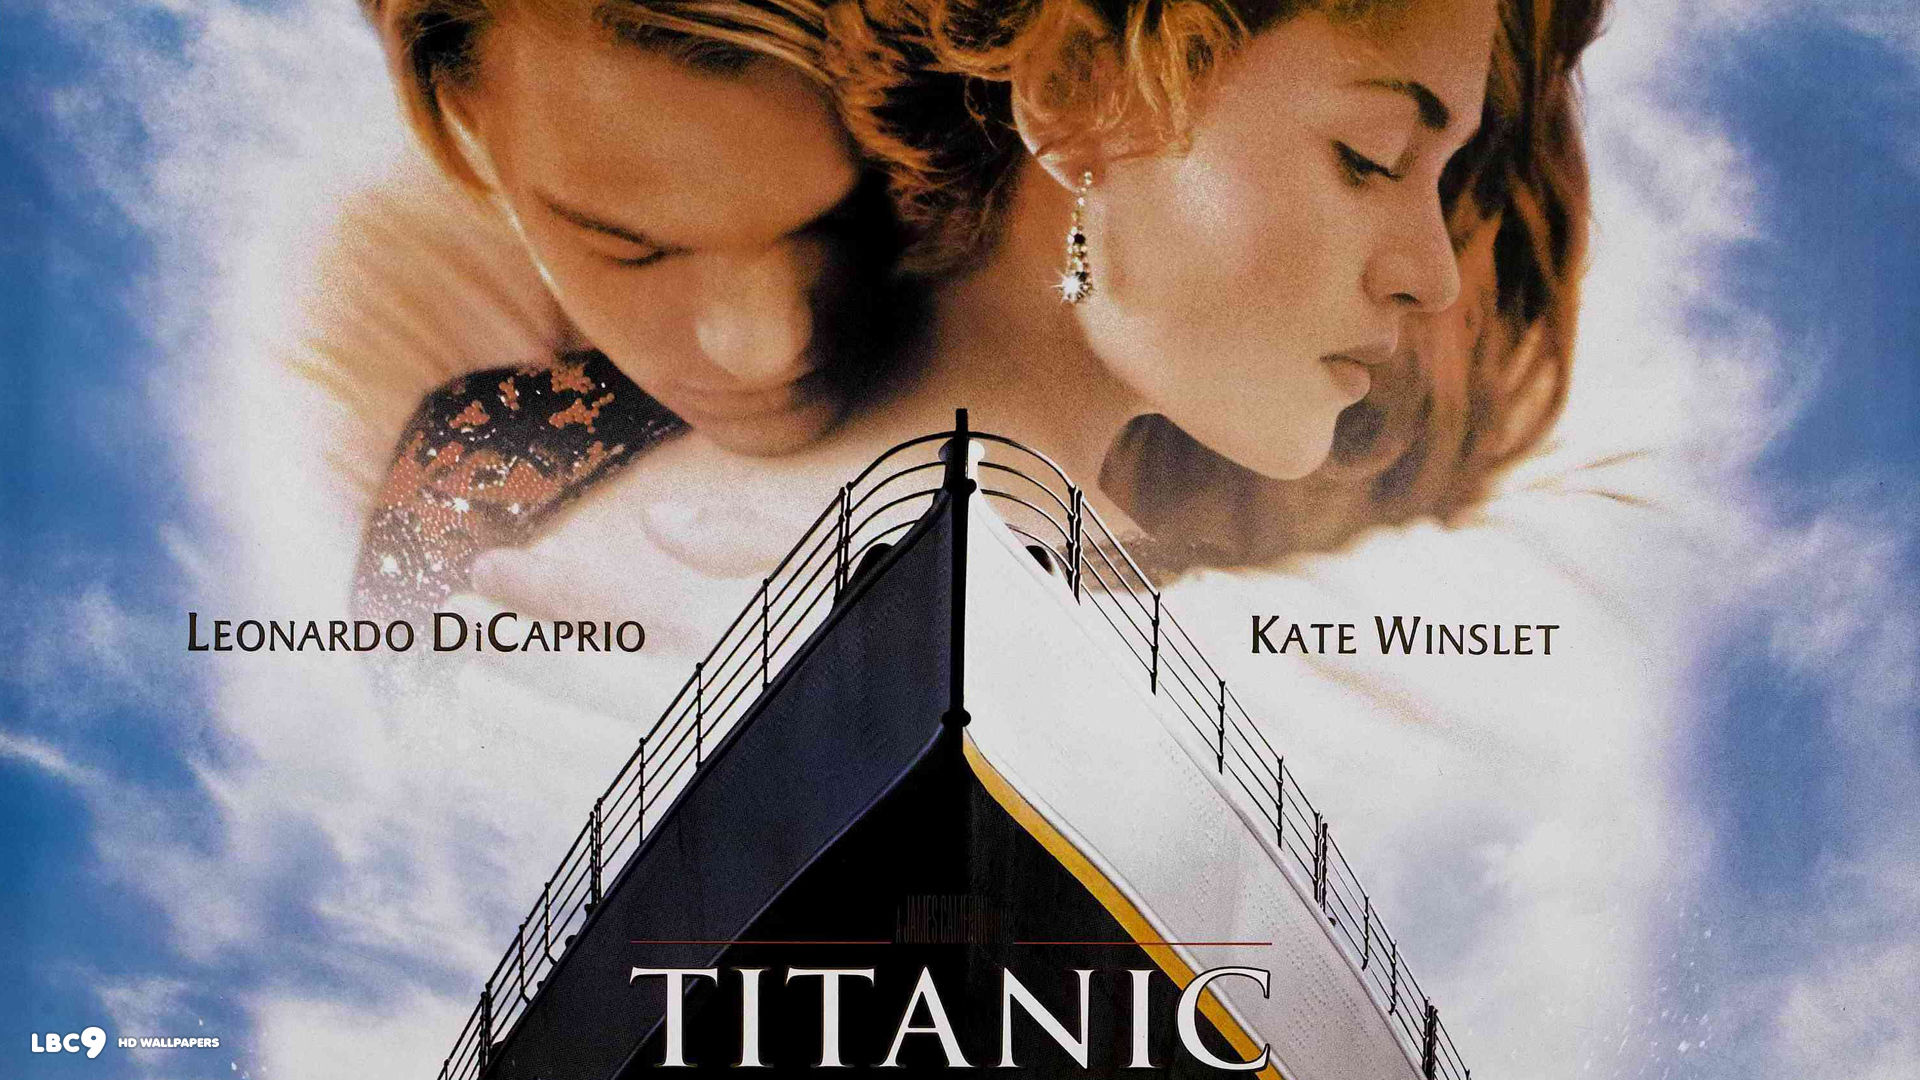 Titanic wallpaper 3 / 6 movie hd backgrounds